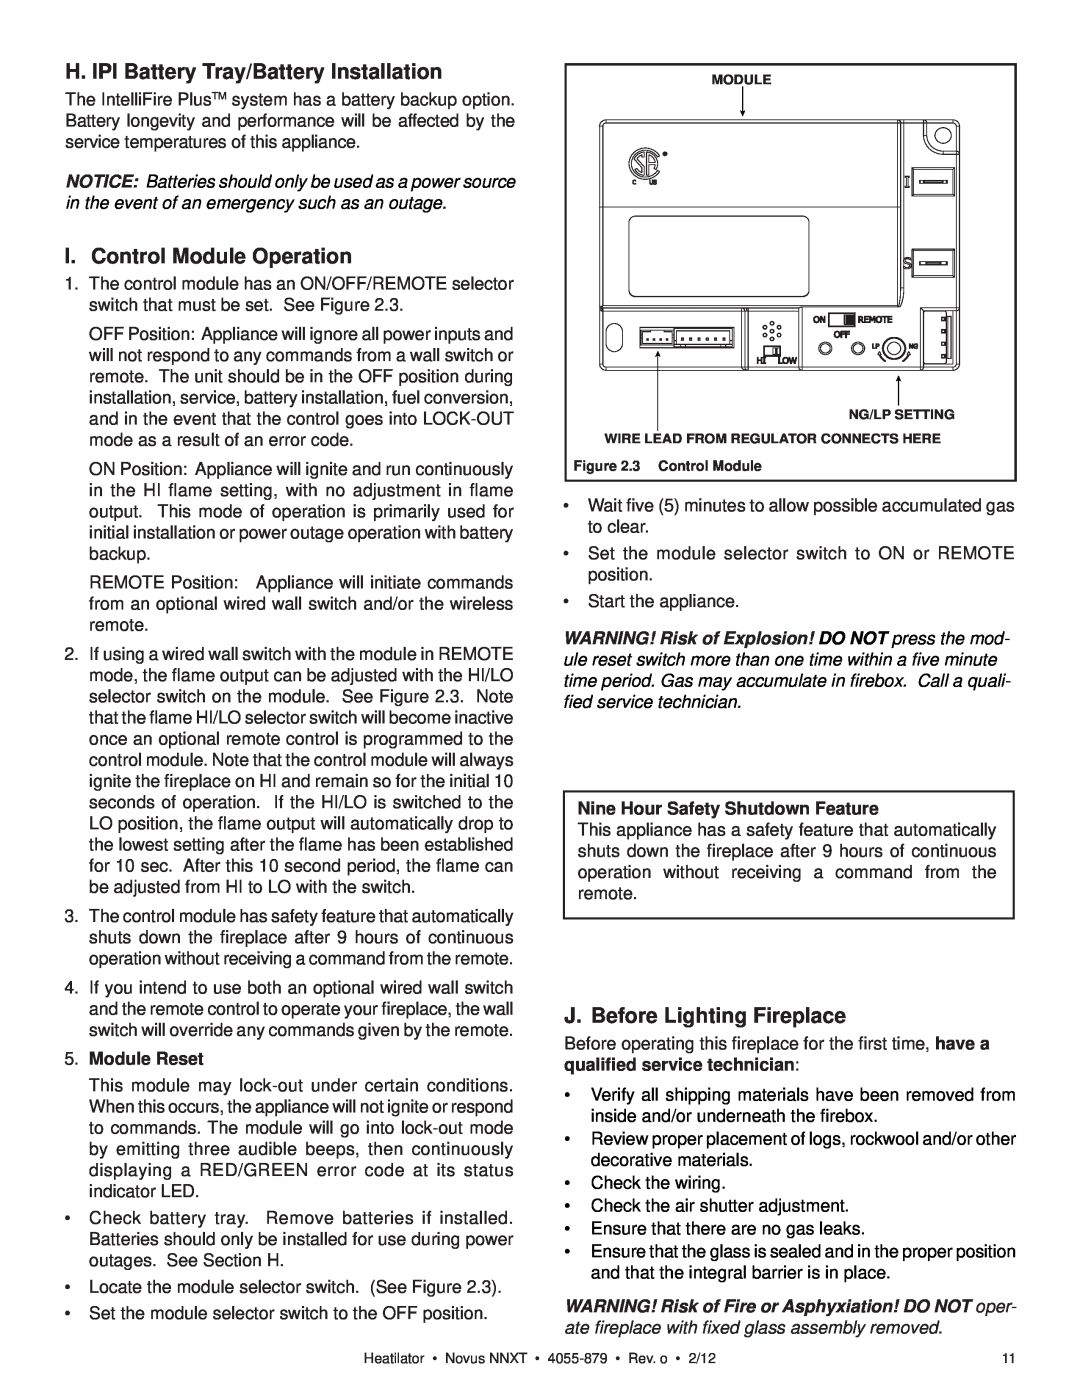 Heatiator NNXT4236I H. IPI Battery Tray/Battery Installation, I. Control Module Operation, J. Before Lighting Fireplace 